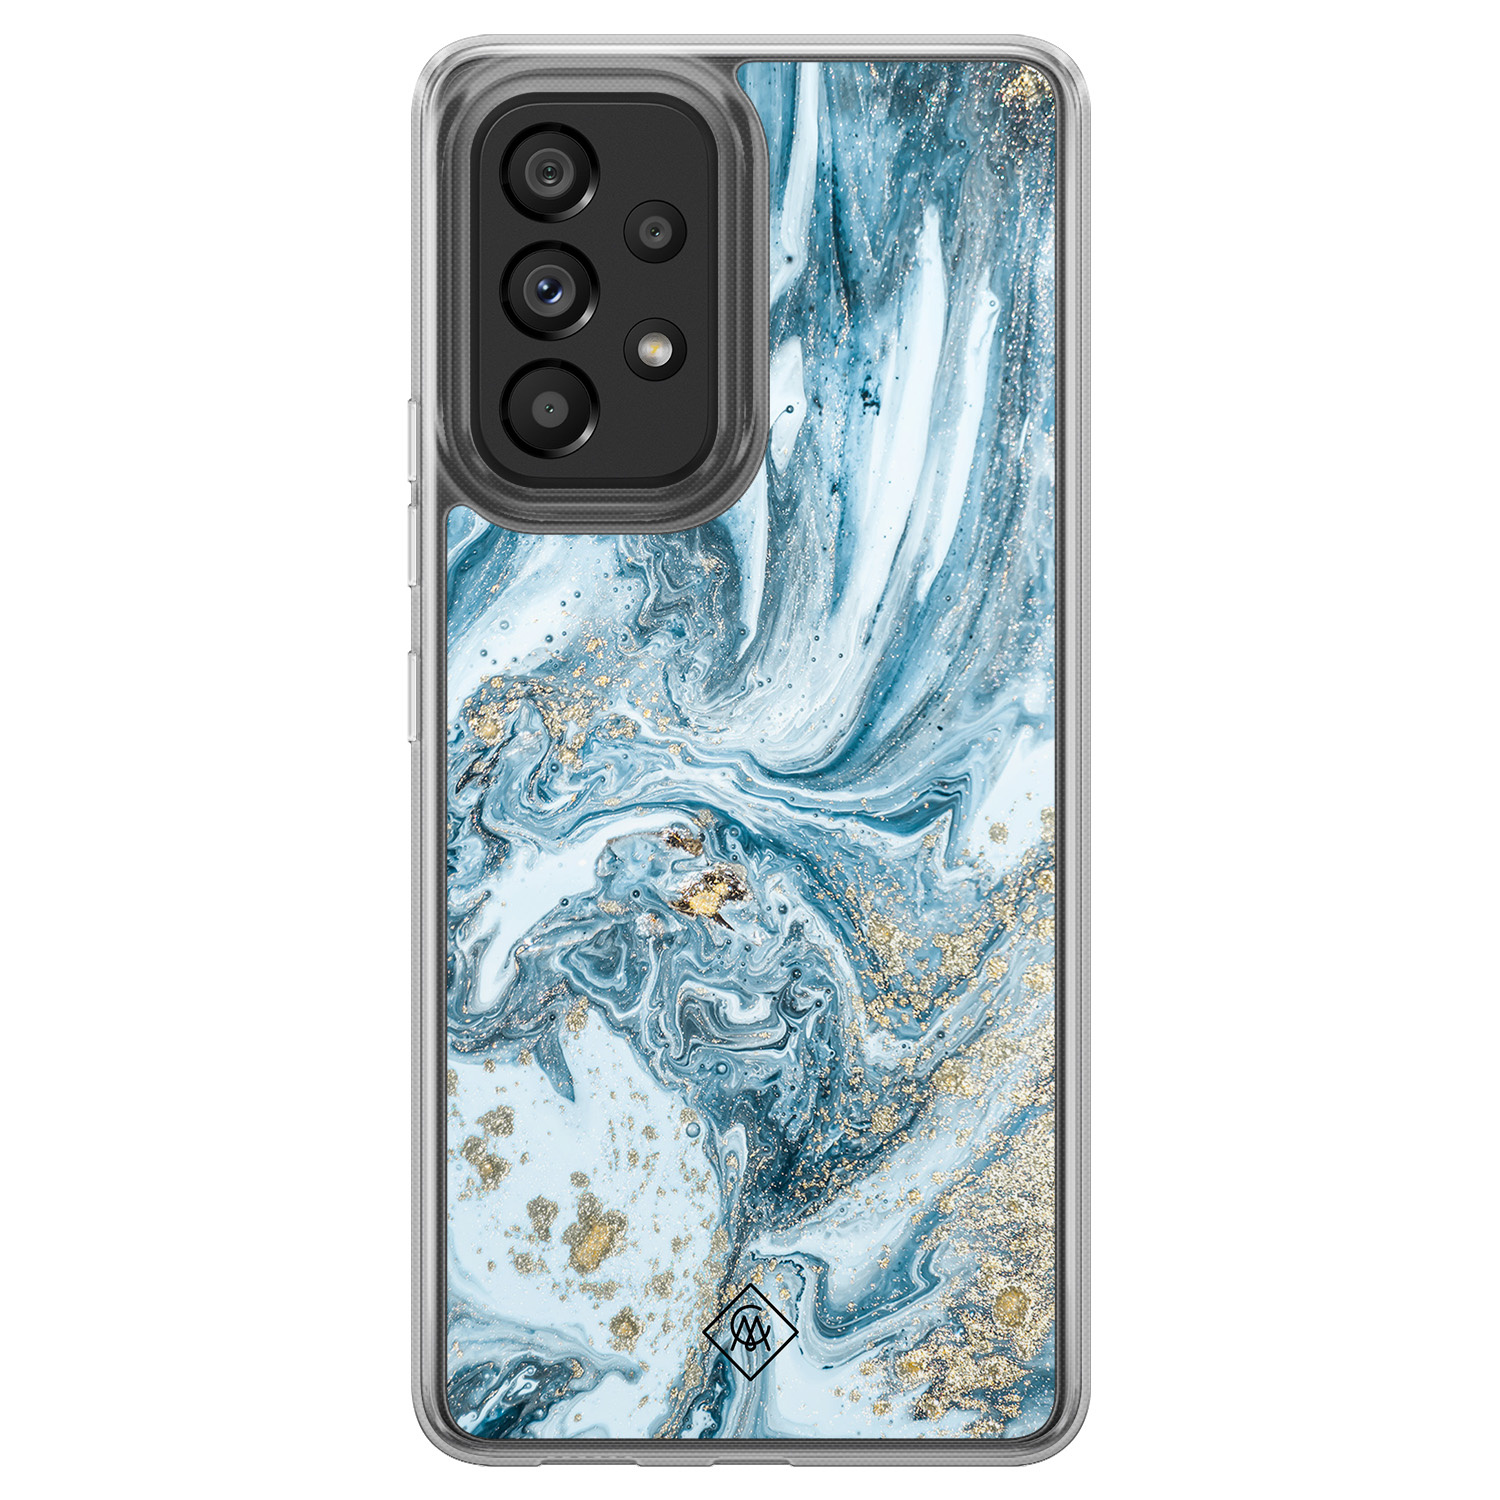 Samsung Galaxy A52 5G hoesje siliconen - Marble sea - Casimoda® 2-in-1 case hybride - Schokbestendig - Marble design - Verhoogde randen - Blauw, Transparant